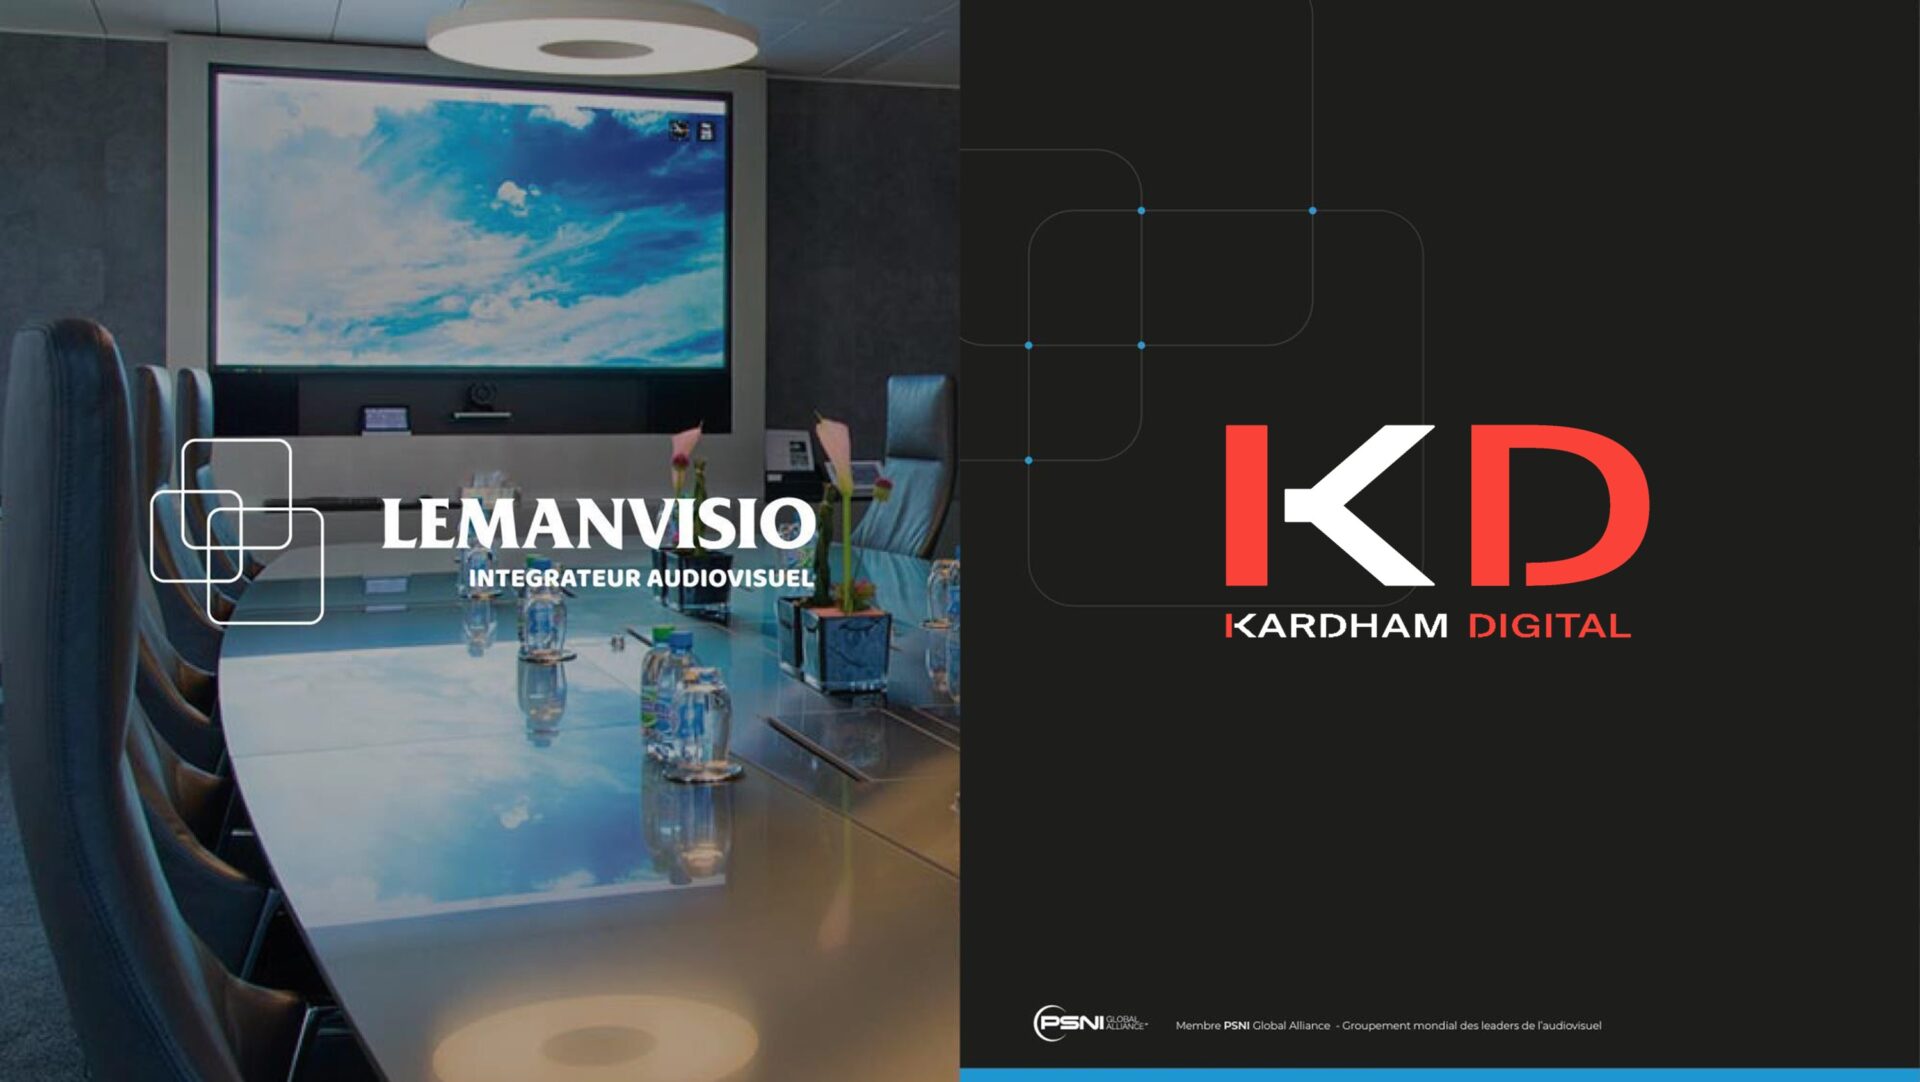 Kardham Digital s’associe à Lemanvisio en Suisse